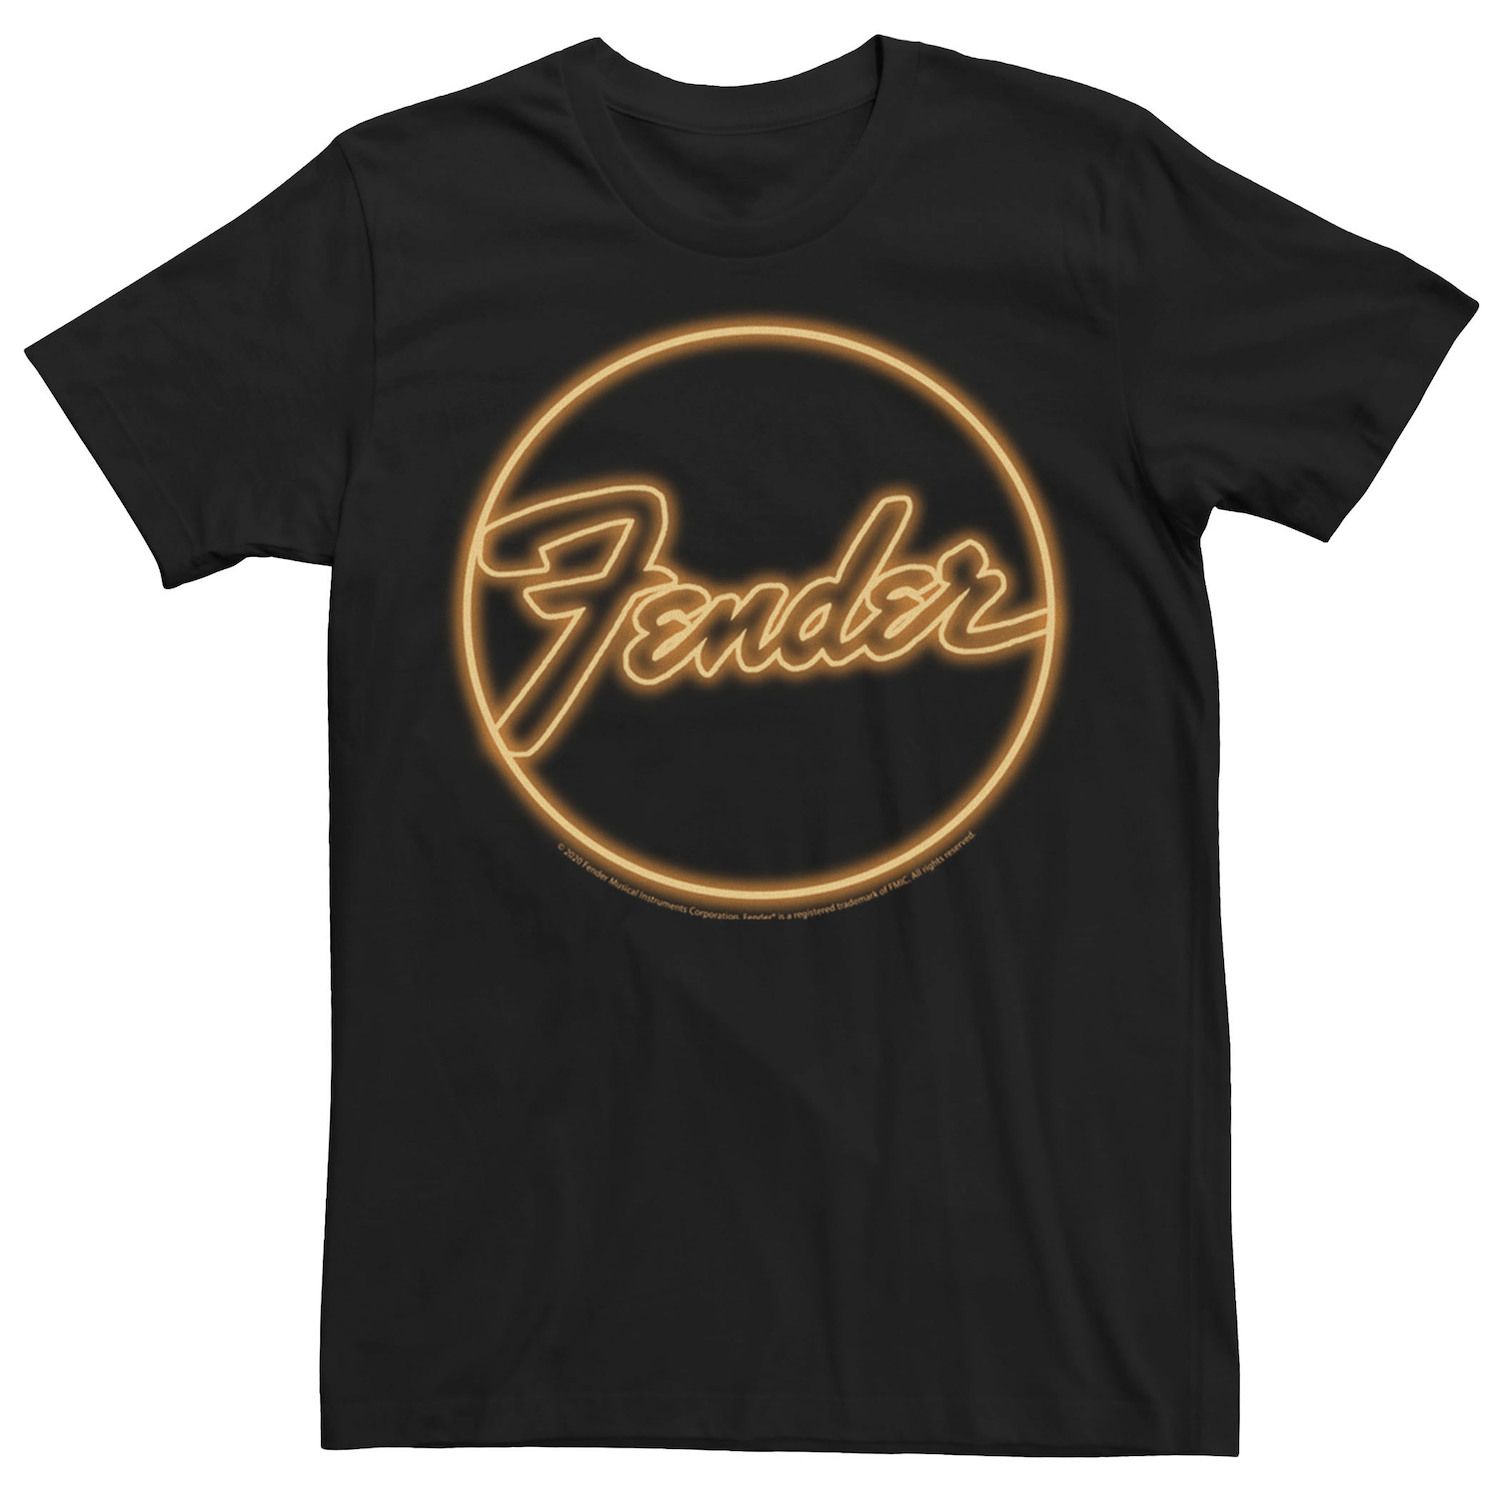 Мужская футболка Fender с неоновым логотипом Licensed Character мужская футболка death before decaf с неоновым скелетом licensed character